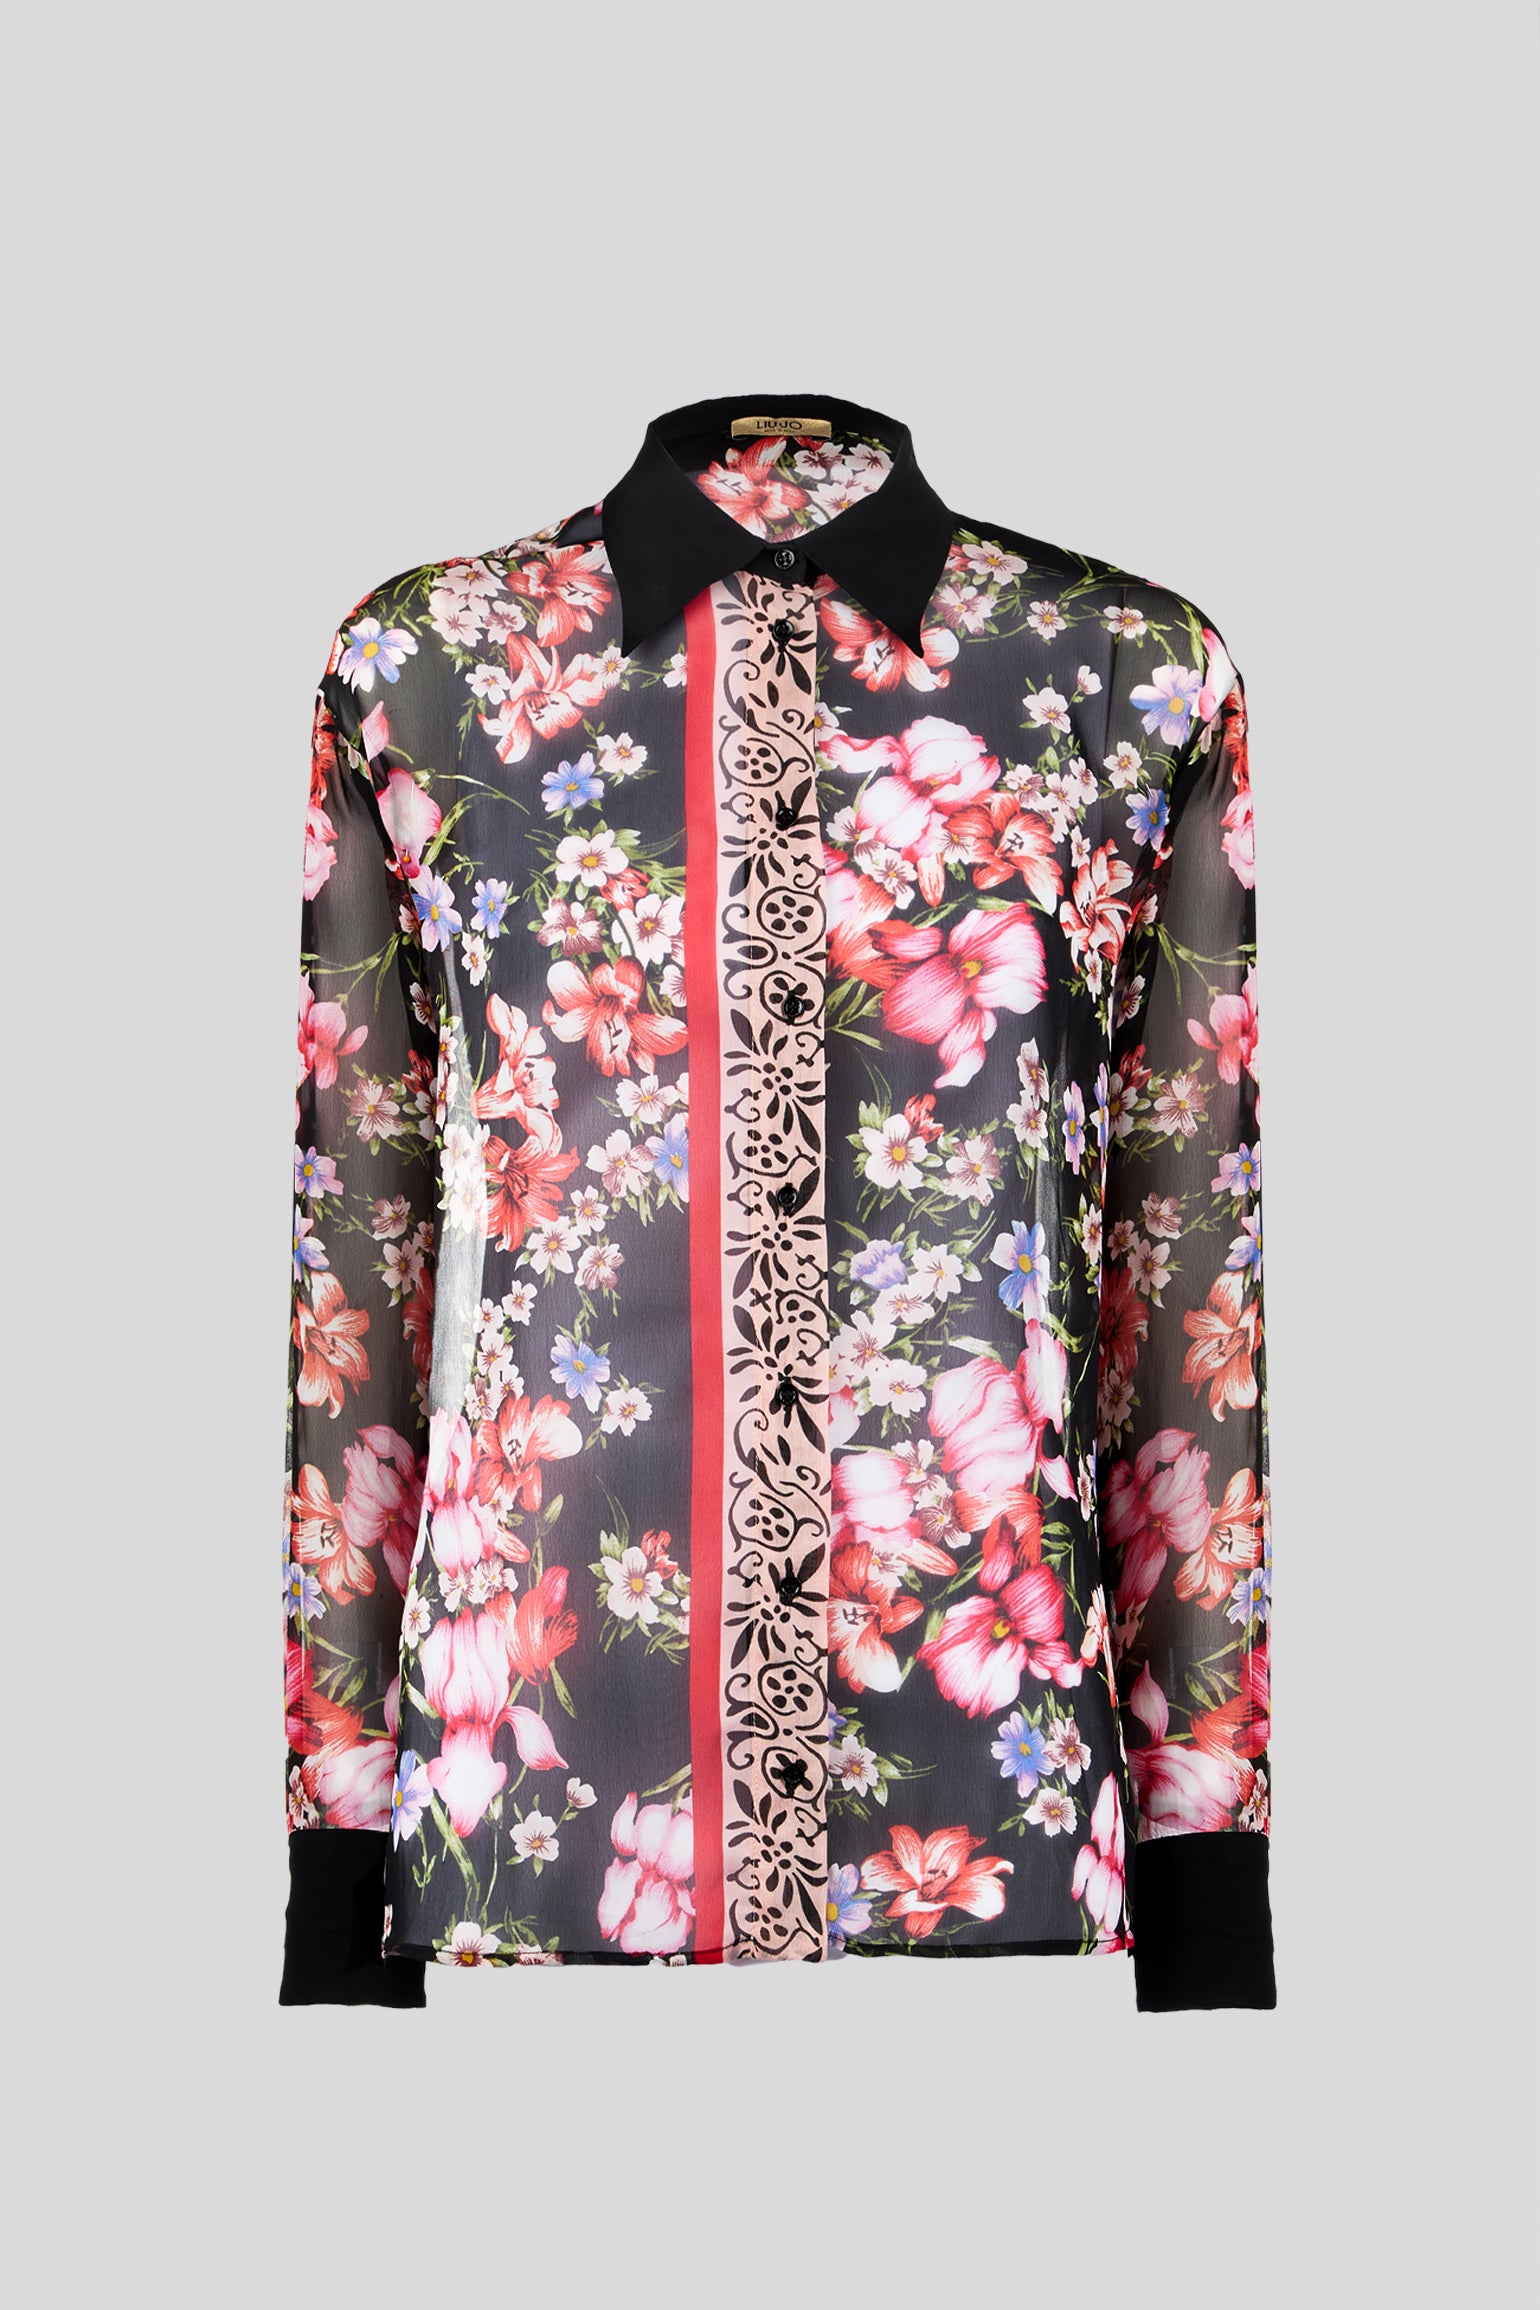 LIU JO Shirt with Floral Print